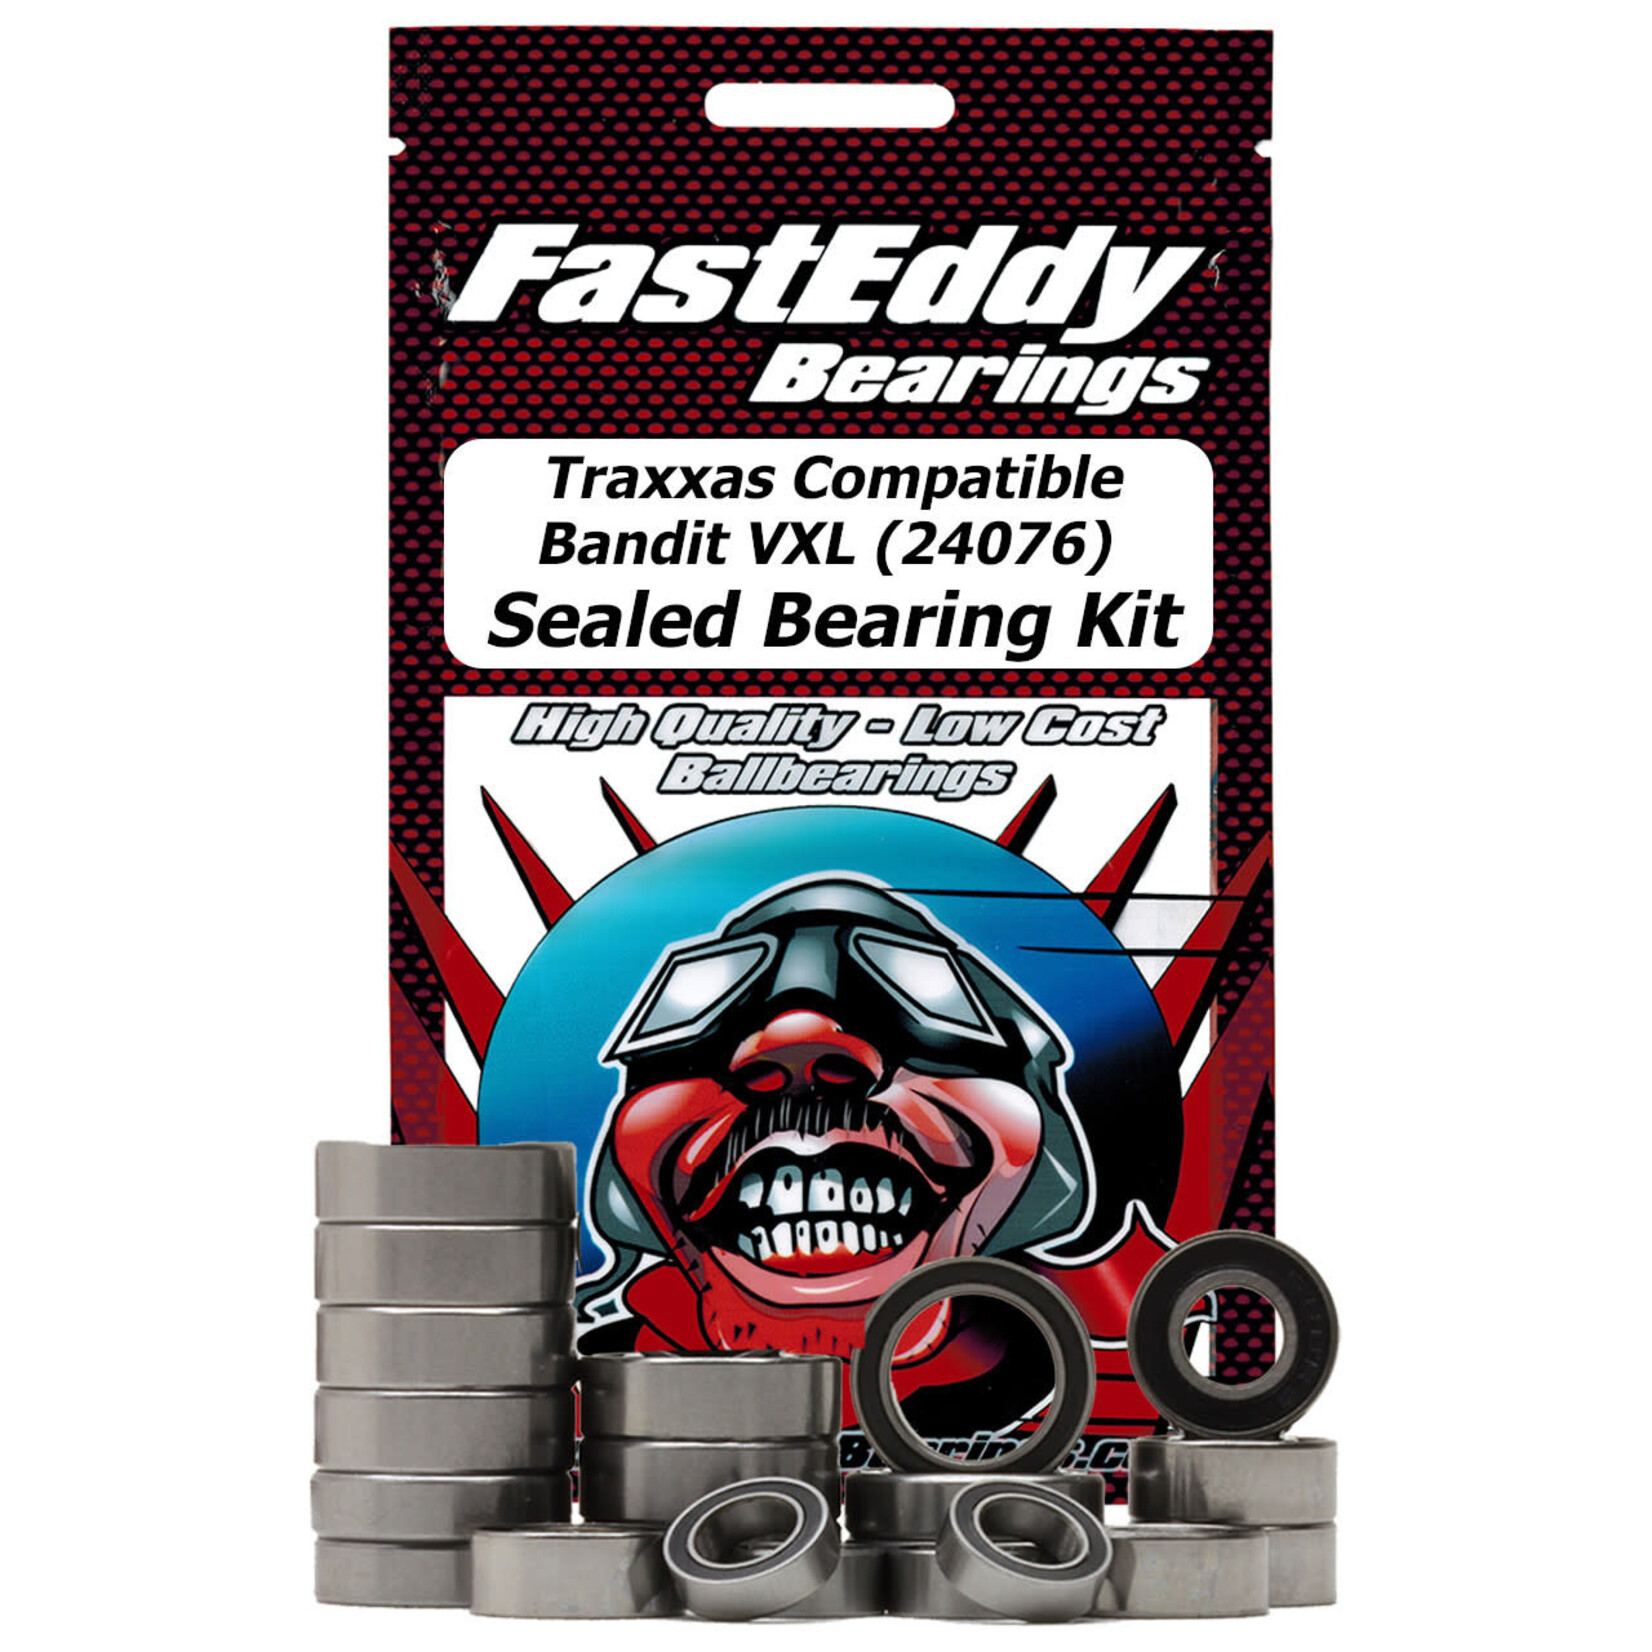 FastEddy FastEddy Bearings Traxxas Bandit VXL Sealed Bearing Kit #TFE6967